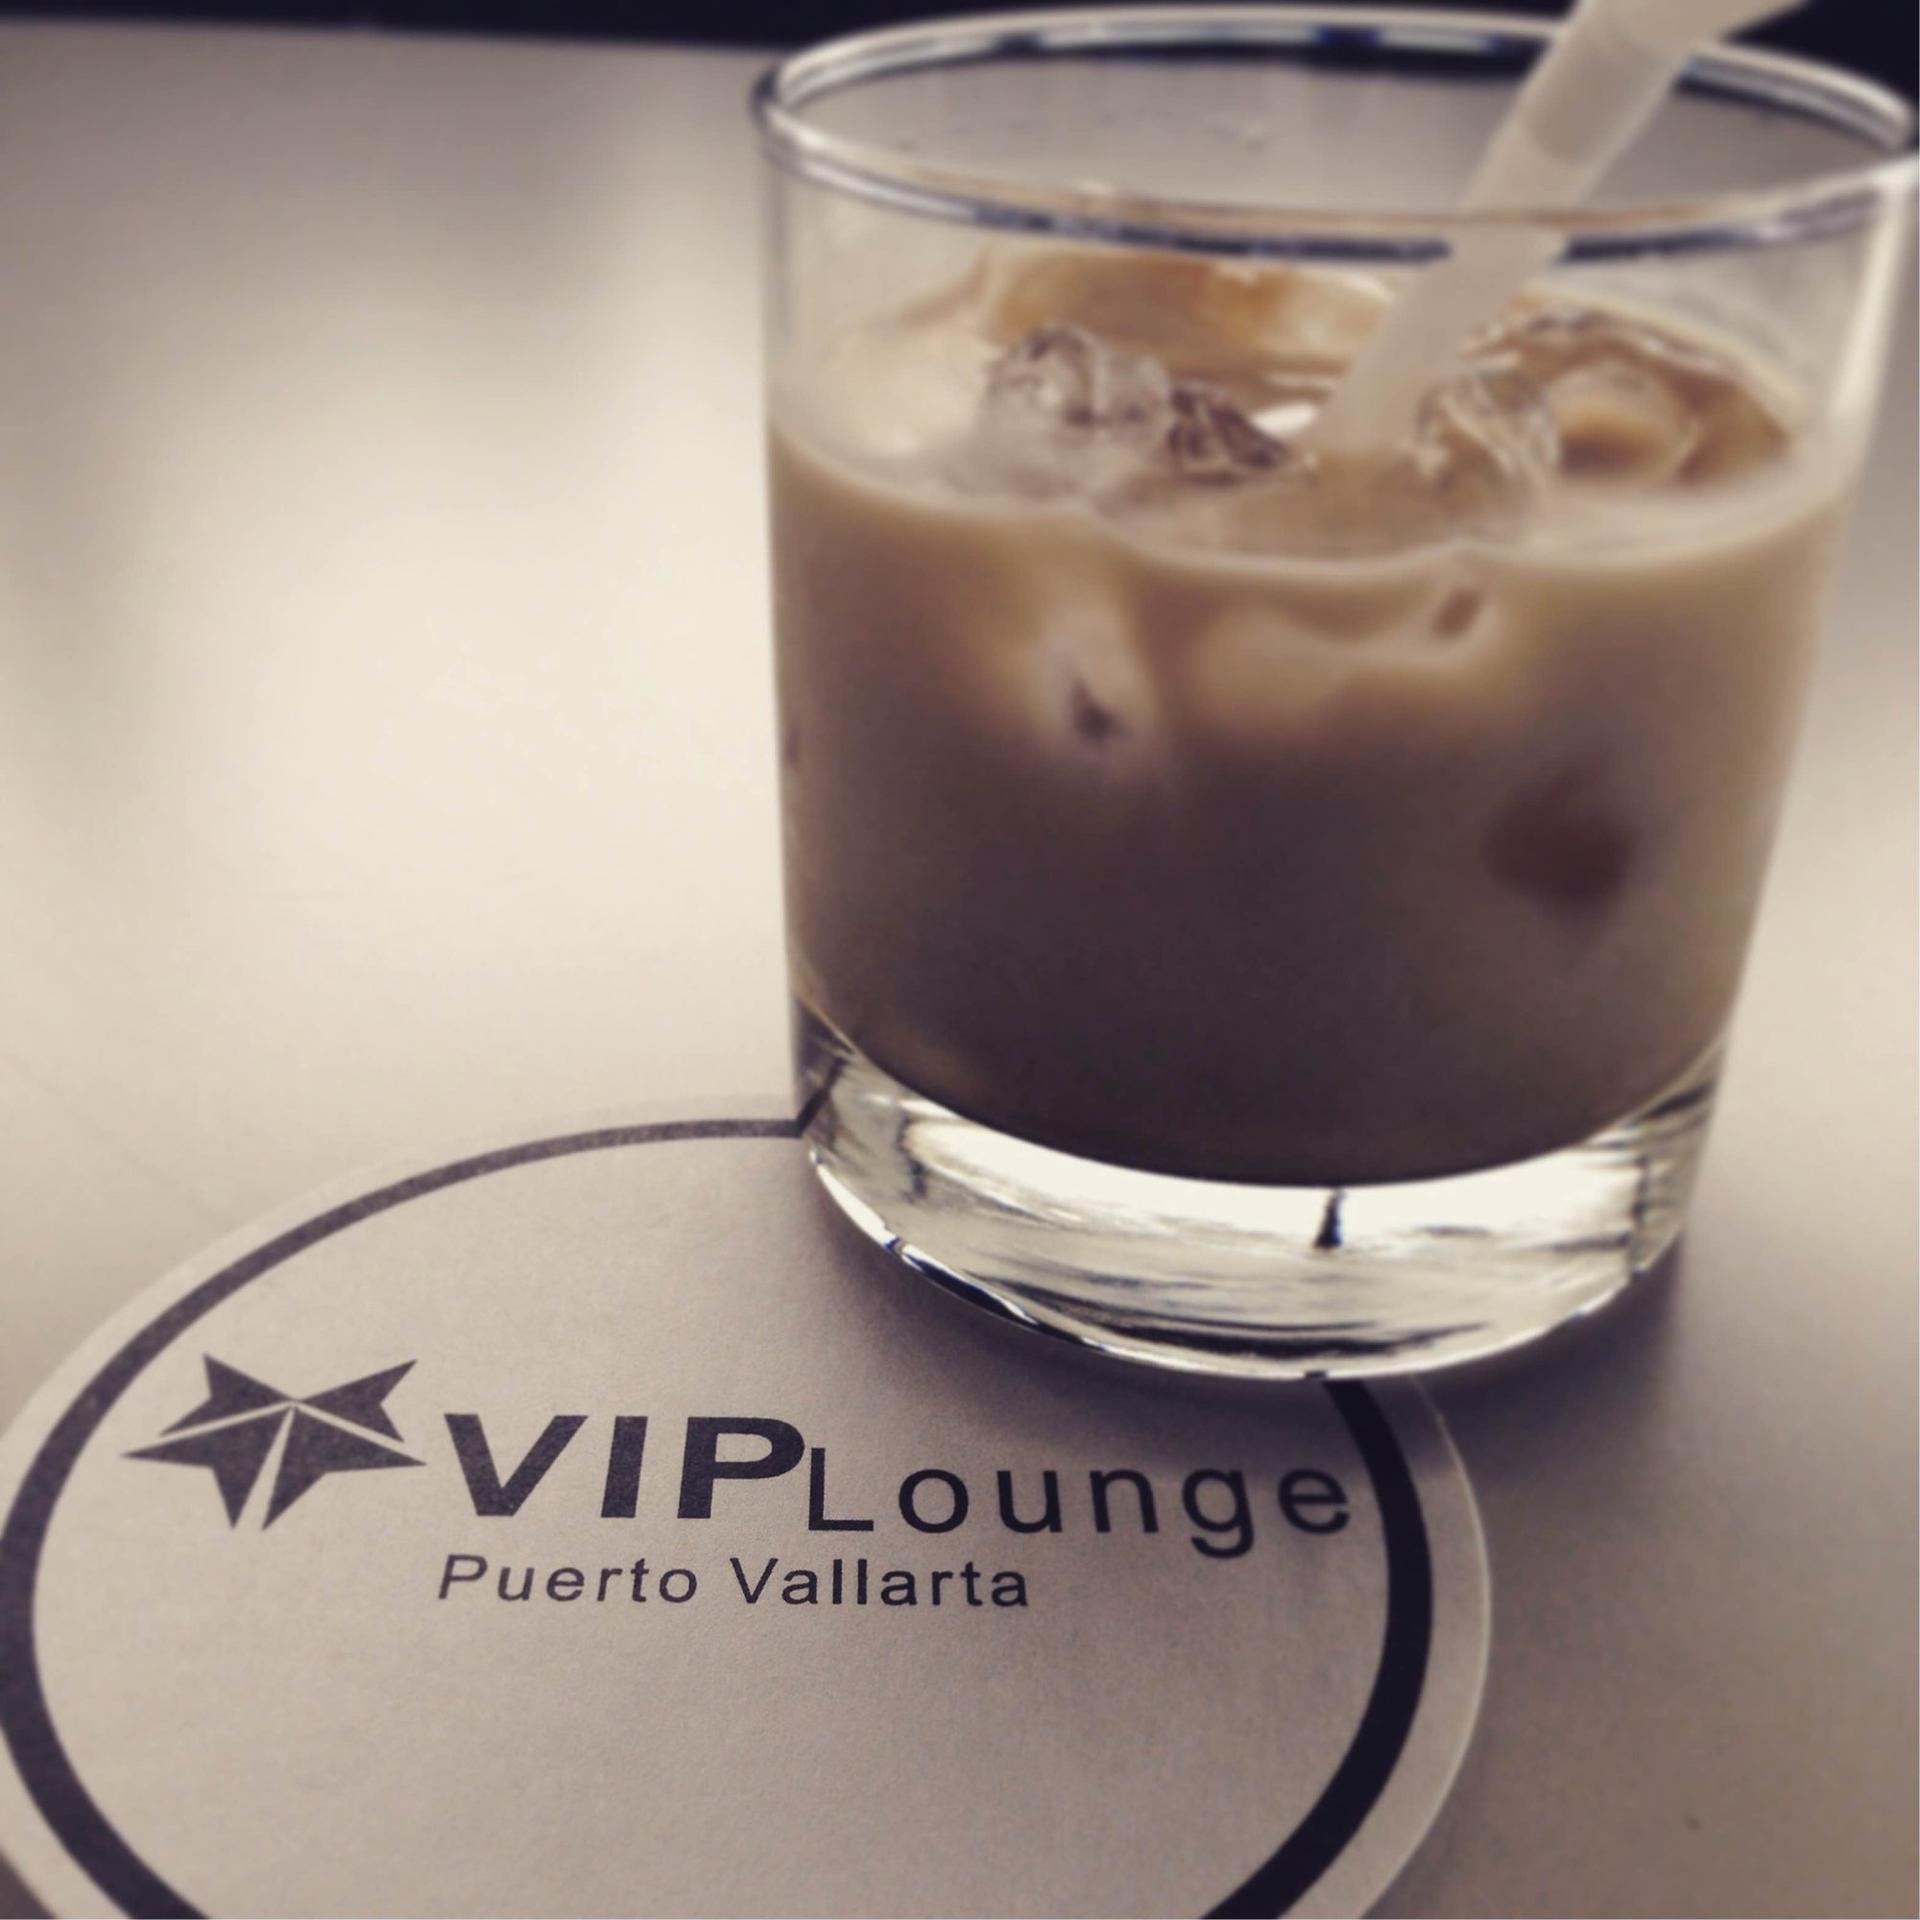 VIP Lounge image 9 of 29